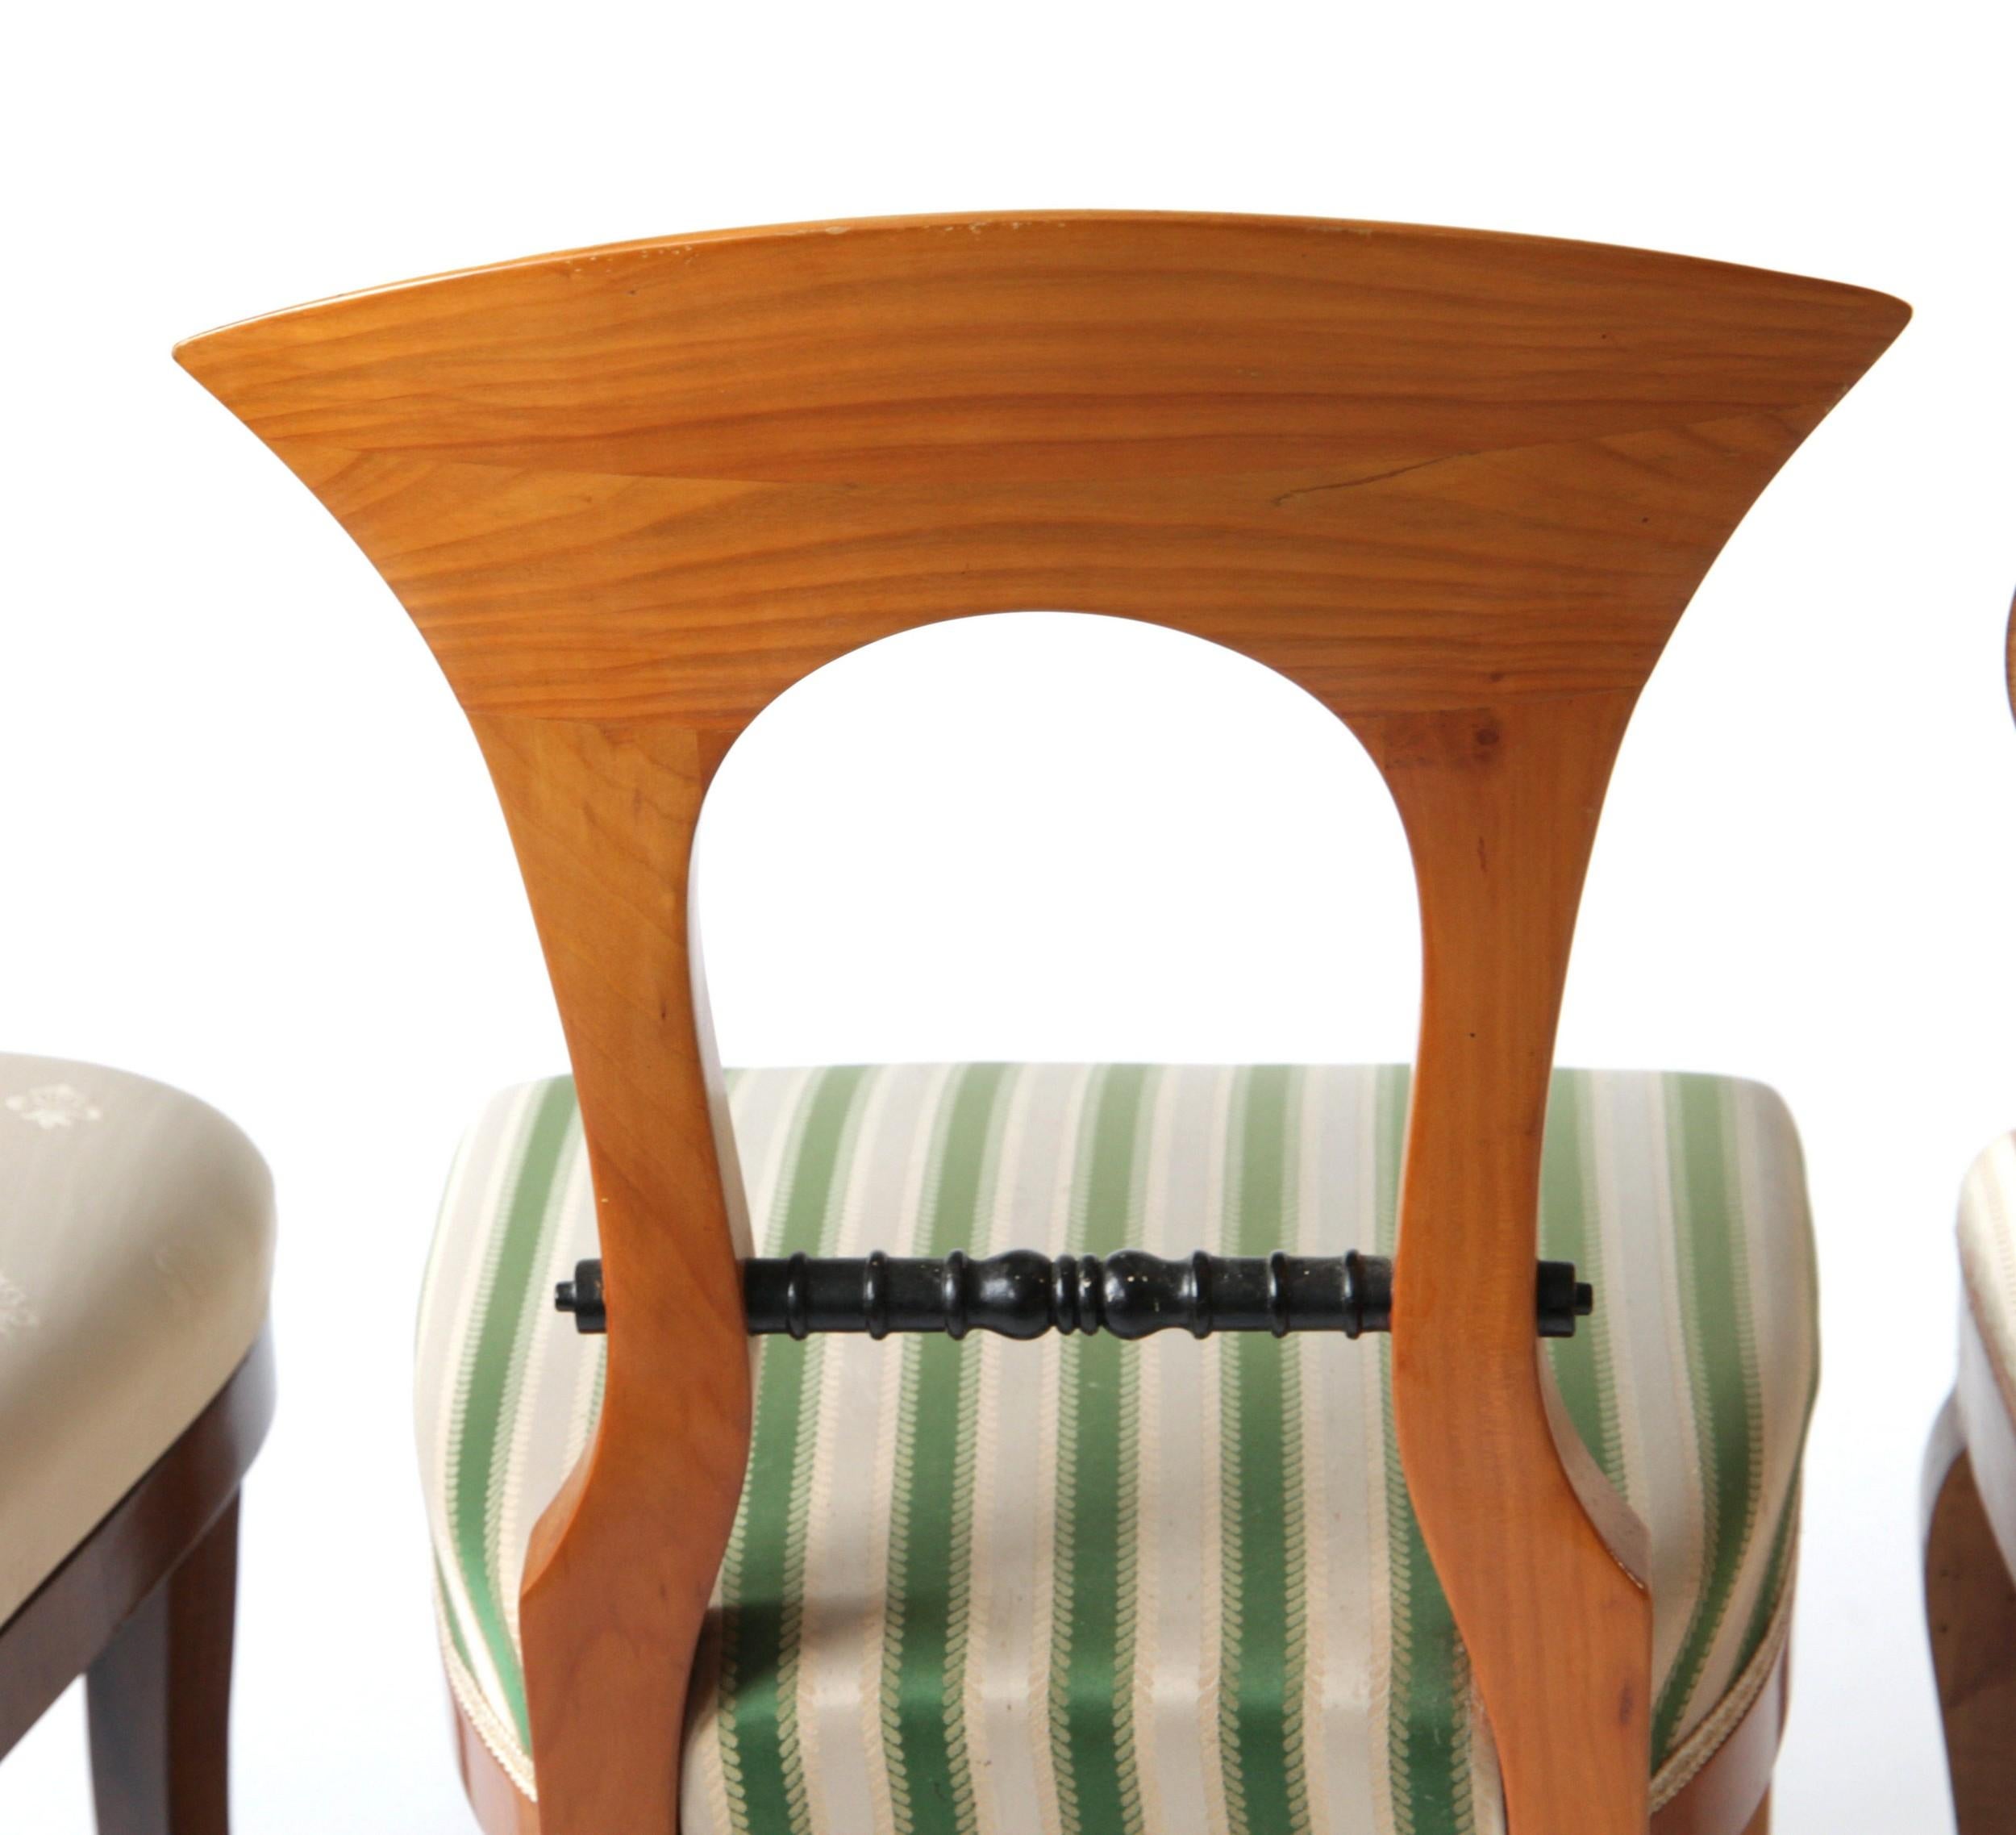 Biedermeier Eclectic Set, Unique Set of 8 Dining Chairs Each in Different Design 6